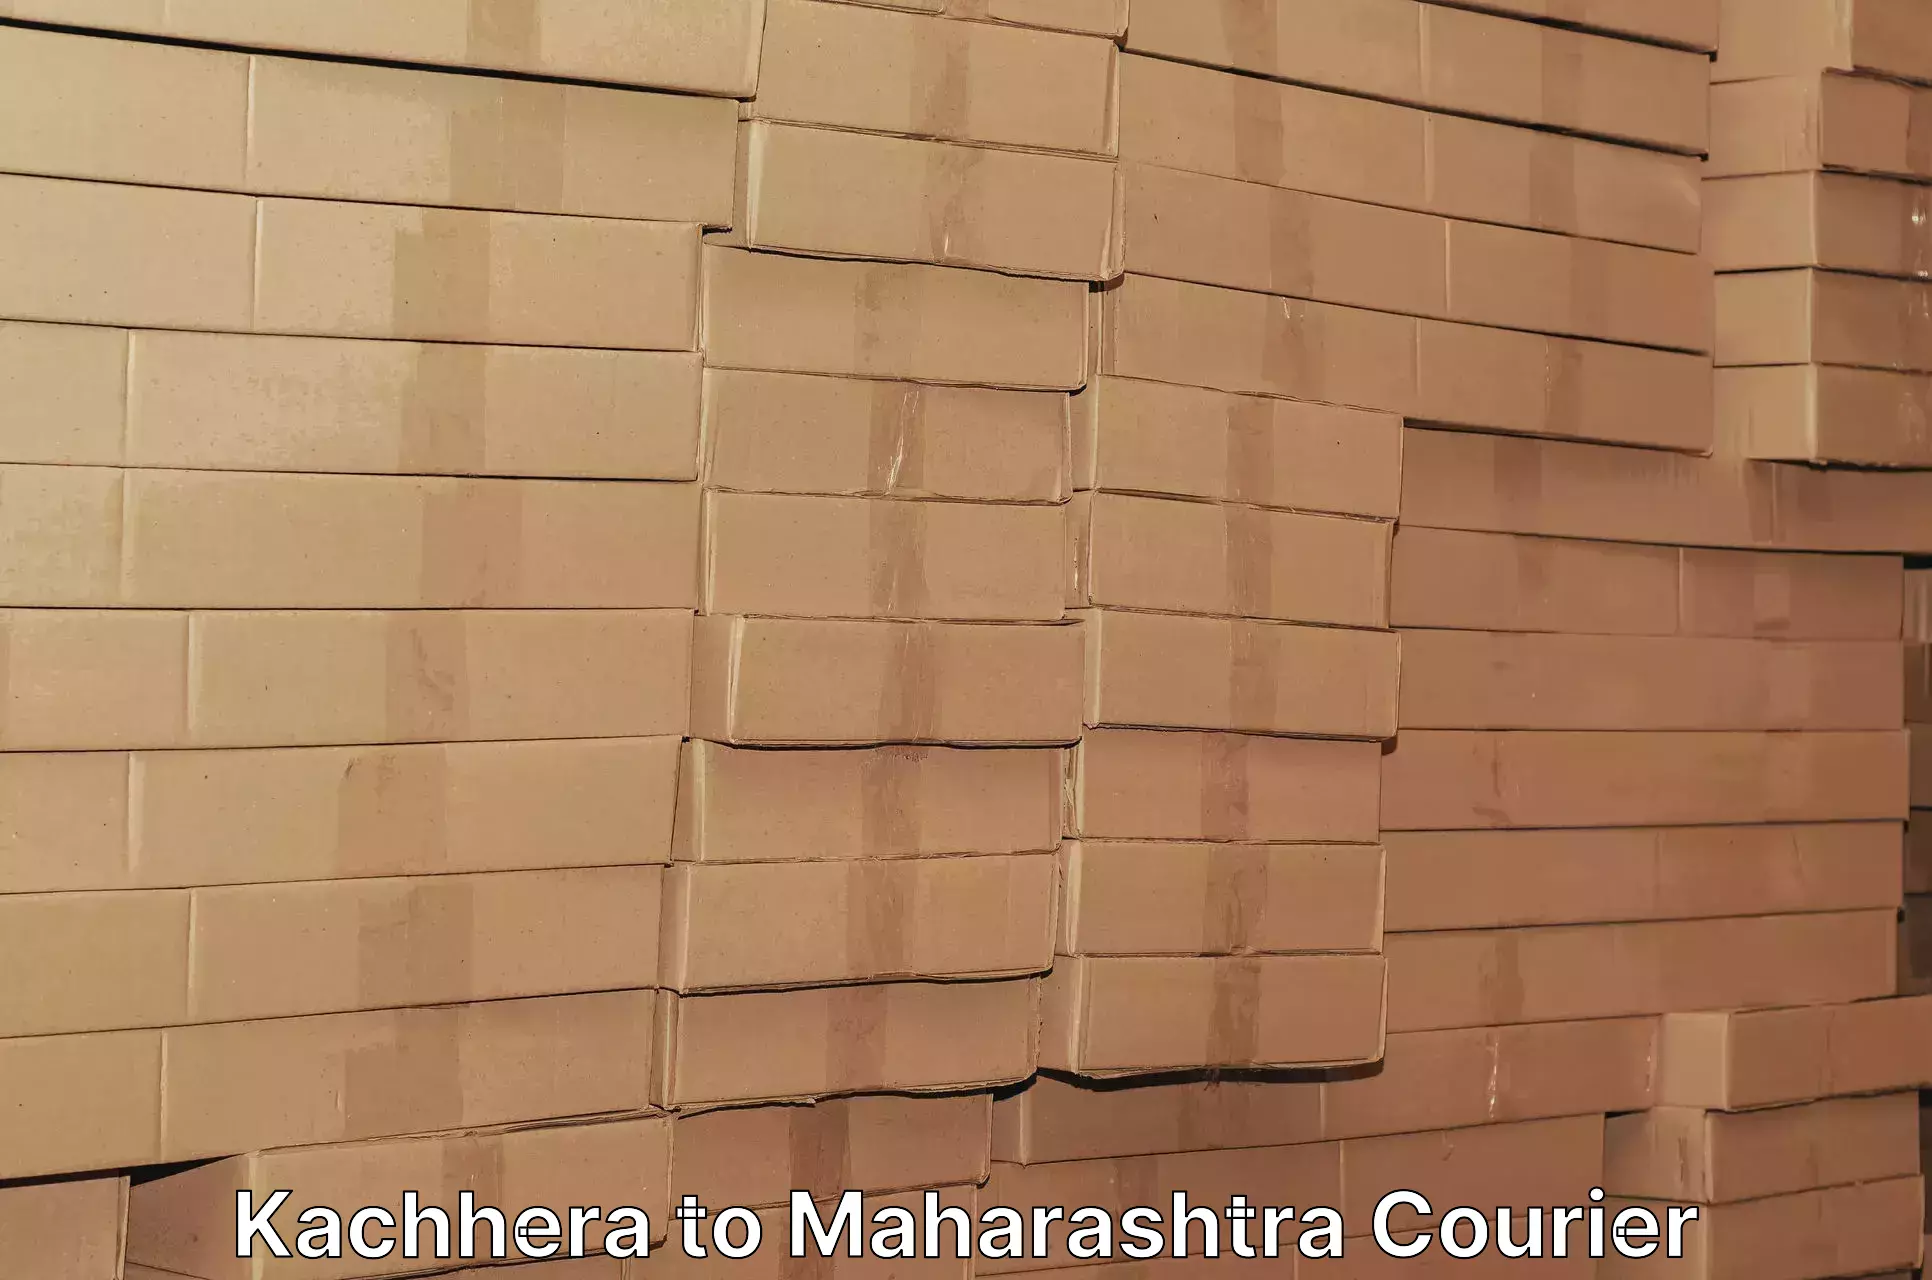 Courier rate comparison Kachhera to Maharashtra